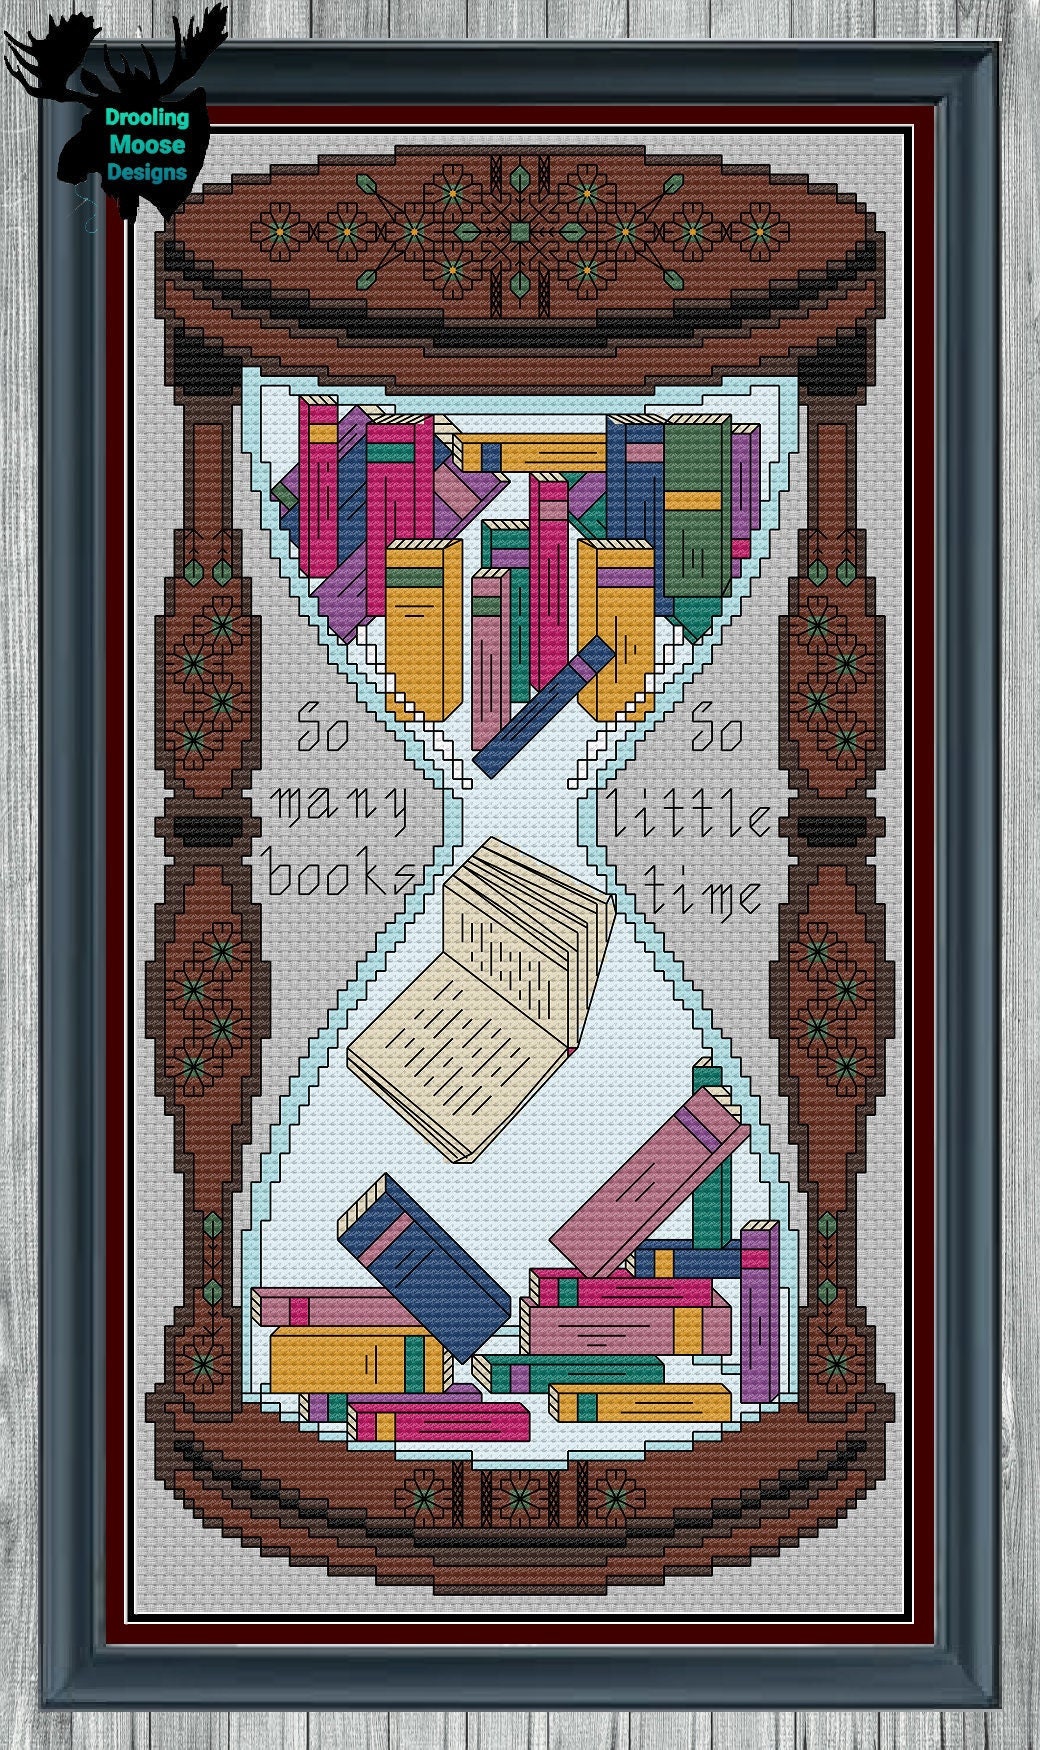 So many books, So little time Cross Stitch Pattern